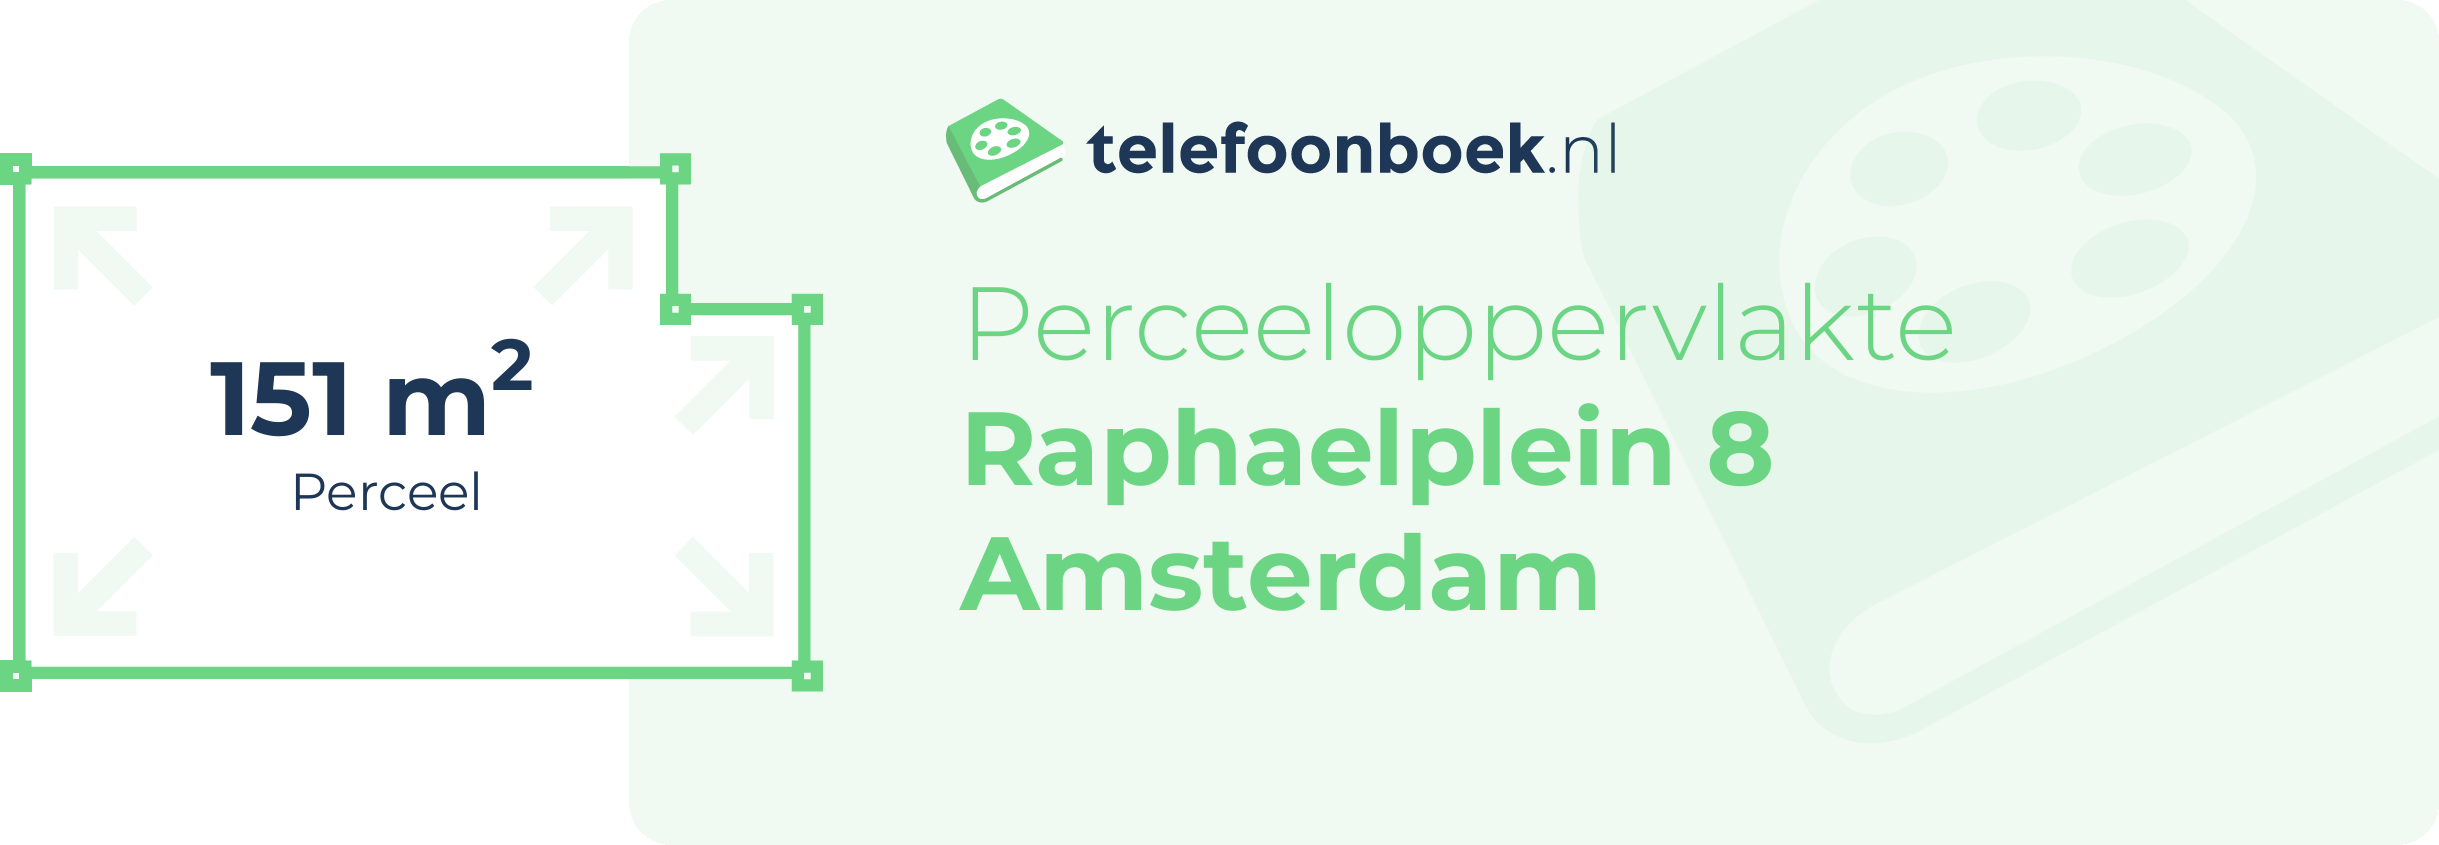 Perceeloppervlakte Raphaelplein 8 Amsterdam